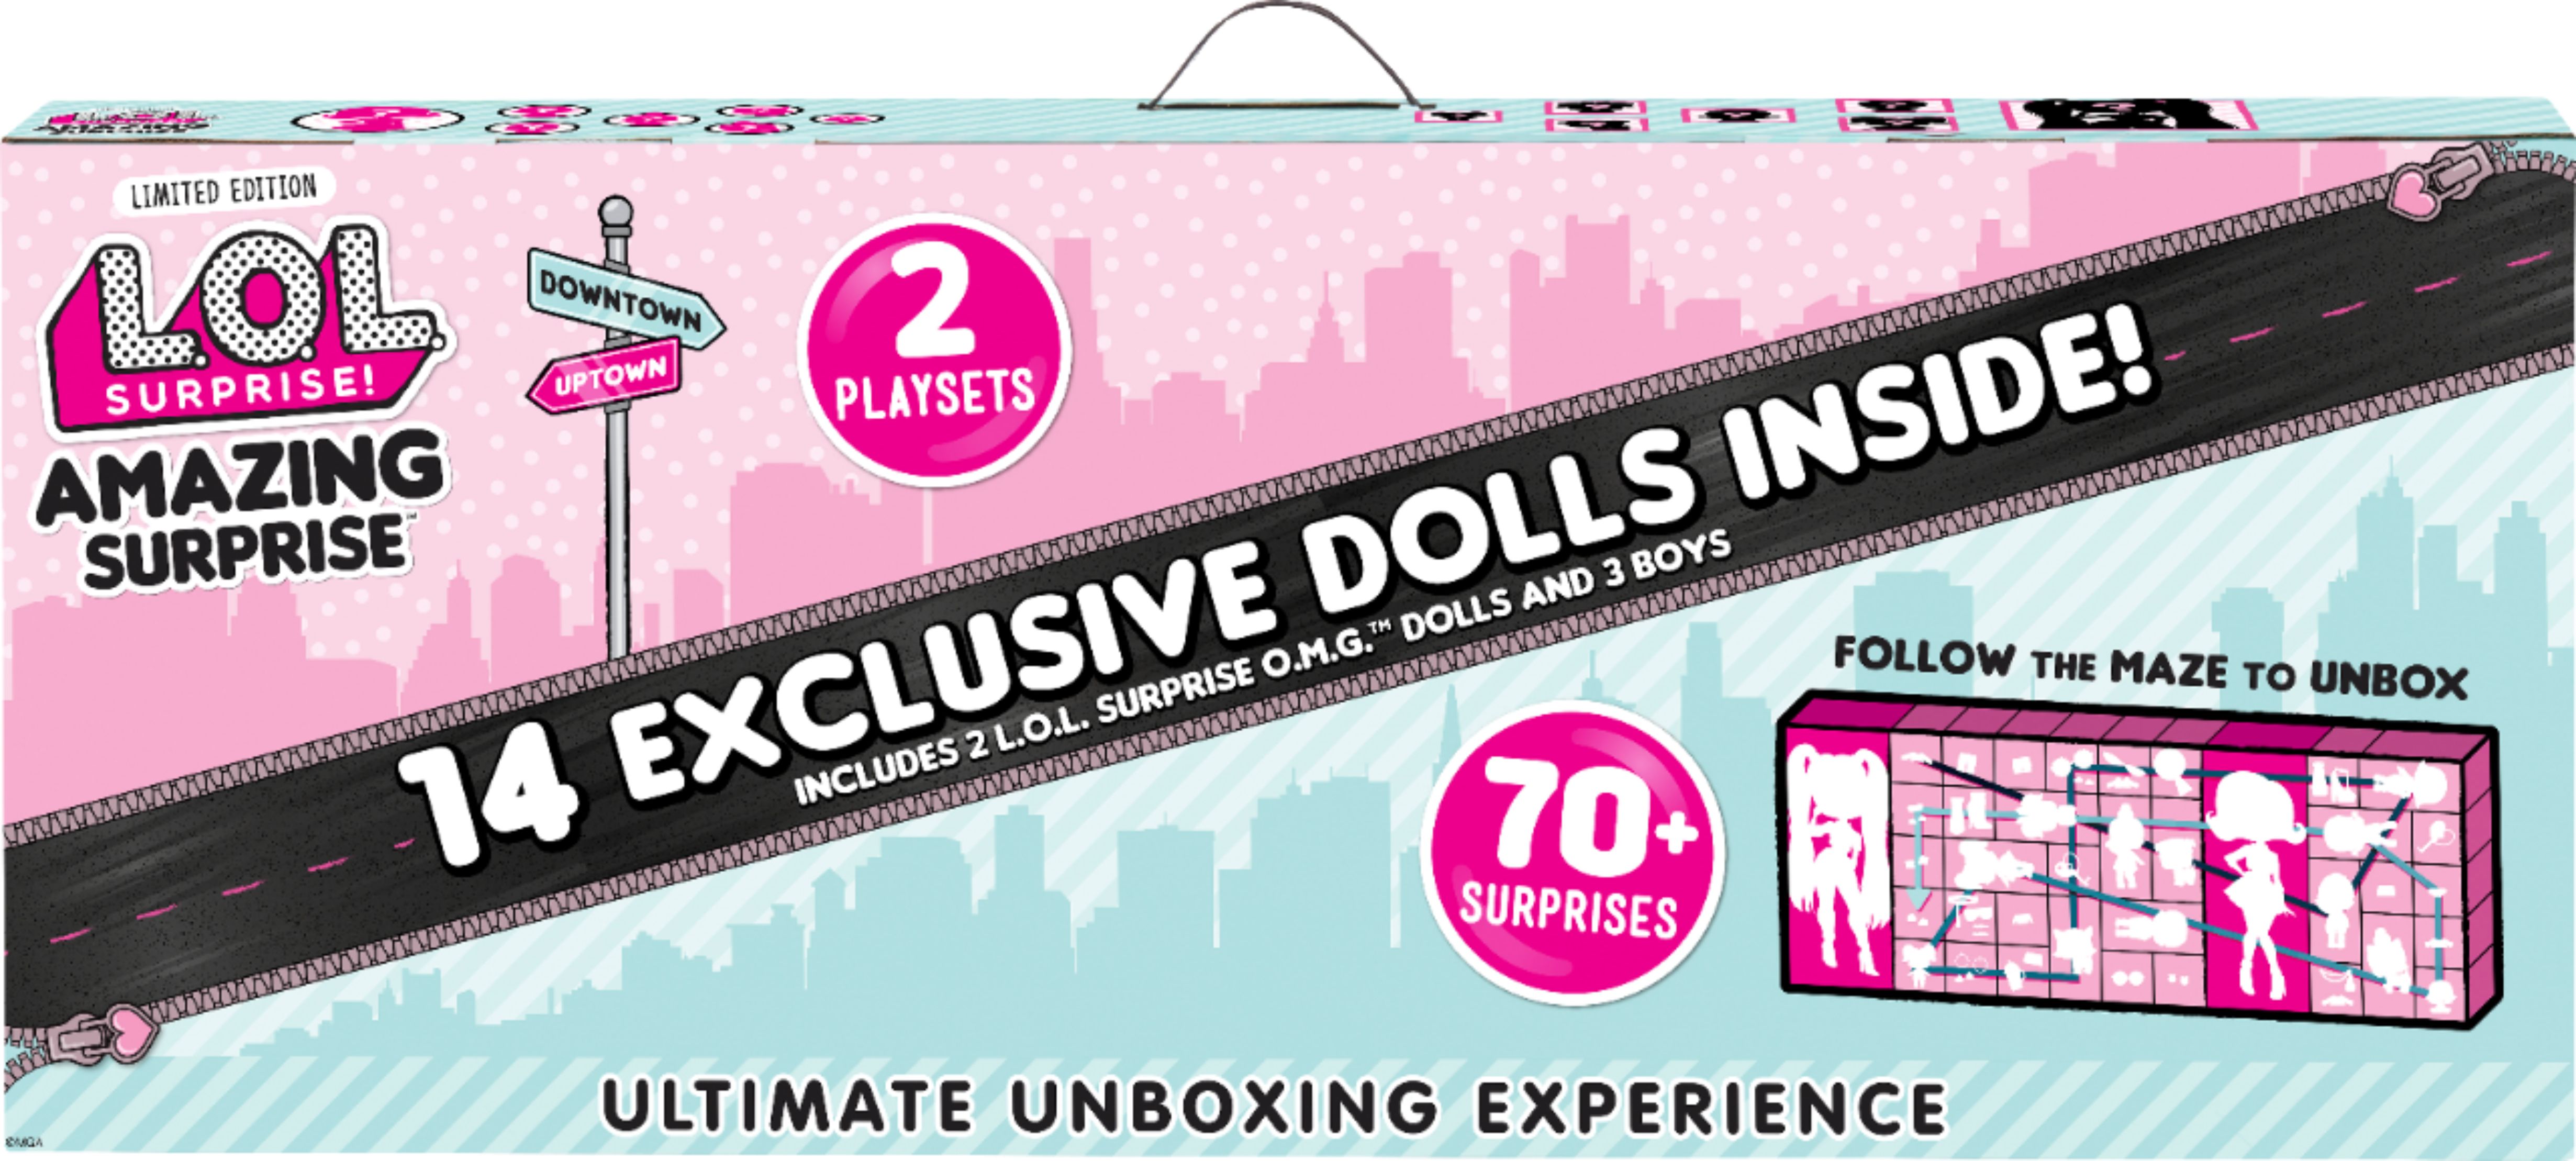 14 exclusive lol dolls